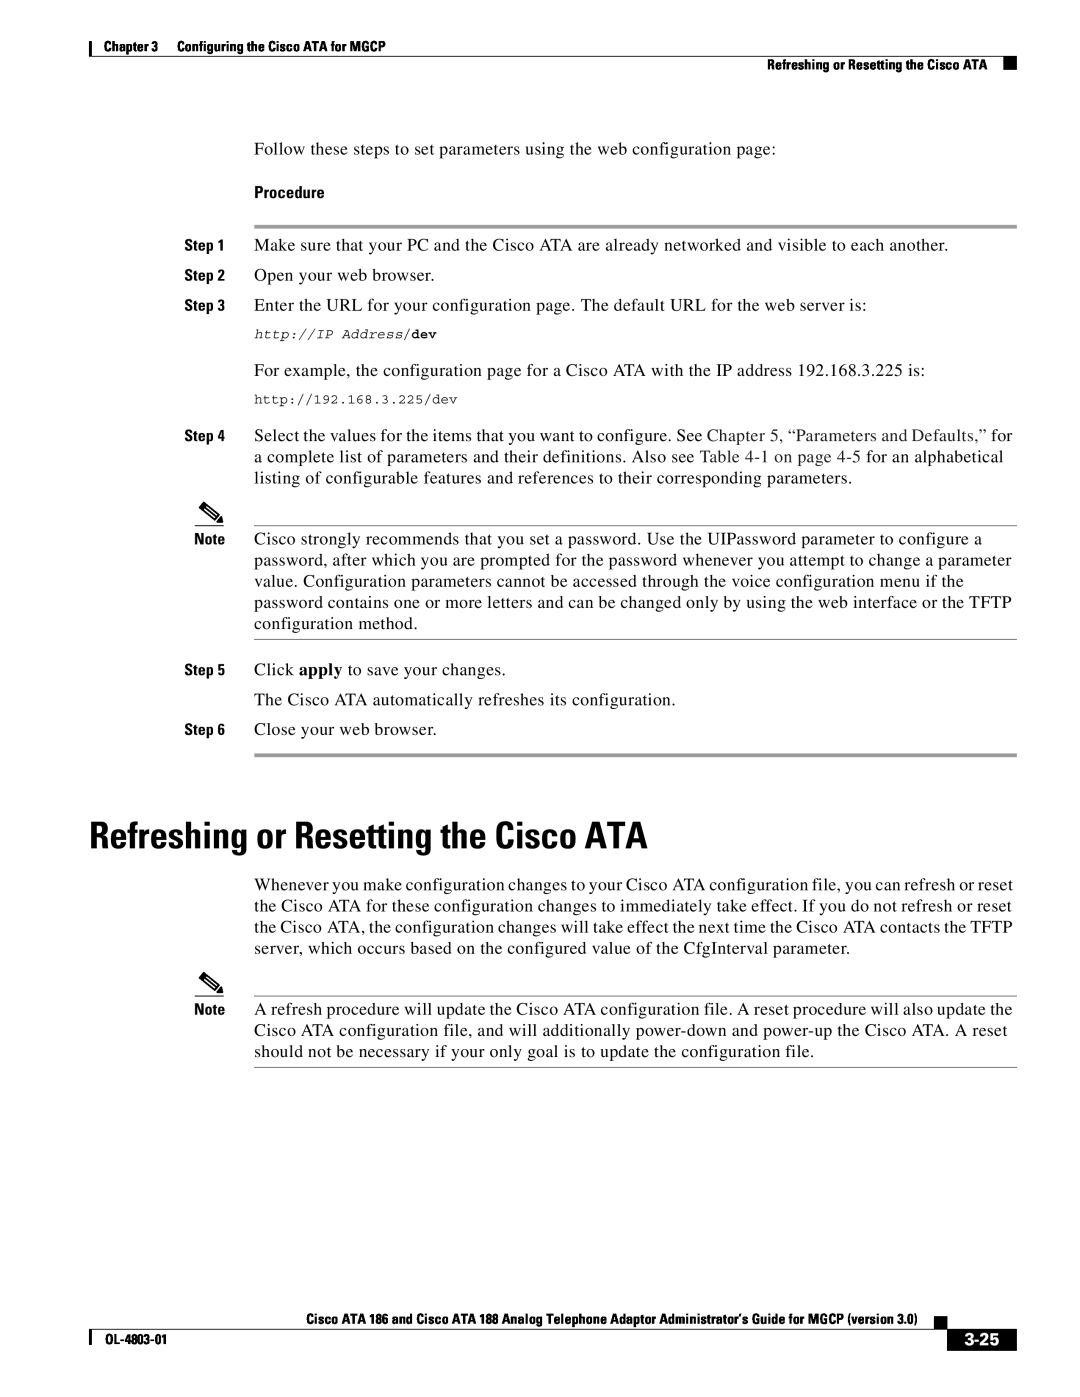 Cisco Systems ATA 188, ATA 186 manual Refreshing or Resetting the Cisco ATA, 3-25, Procedure 